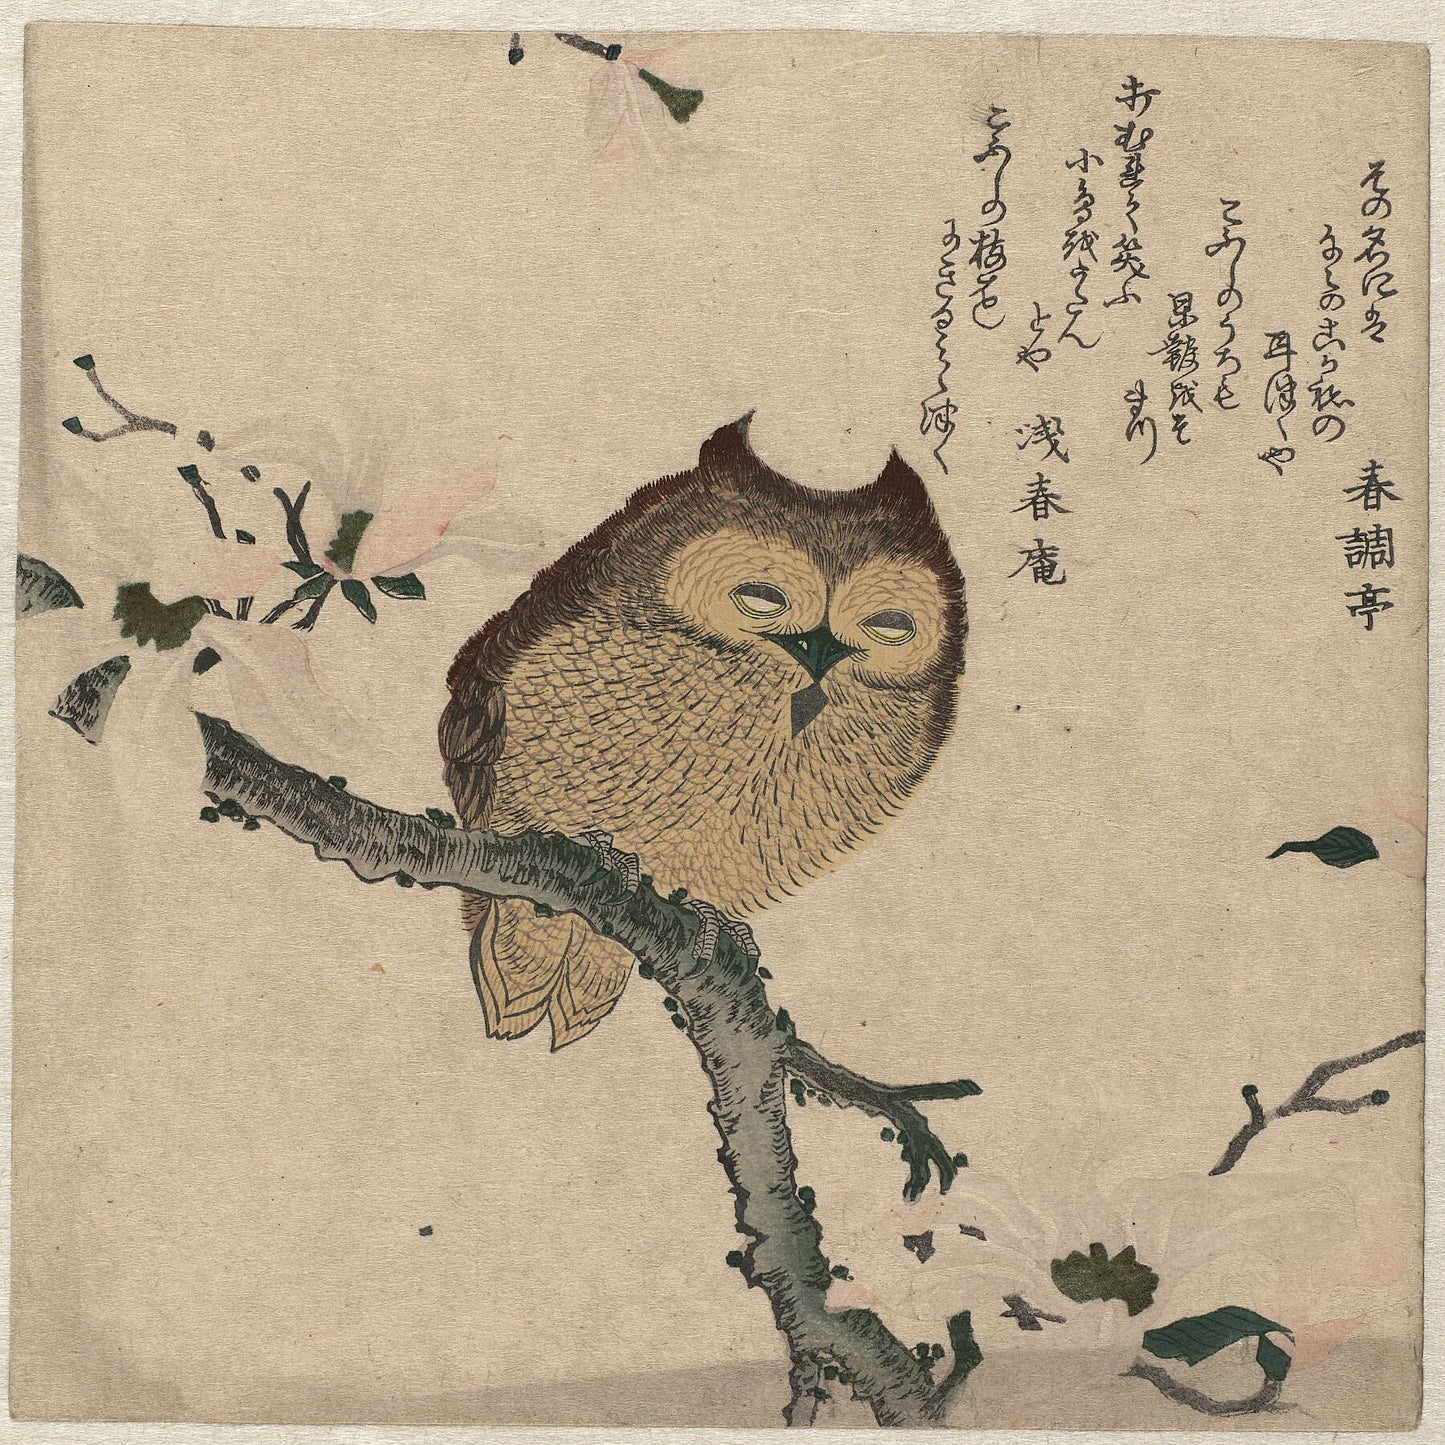 Owl on a Magnolia Branch, Kubota Shunman, c. 1890 - c. 1900